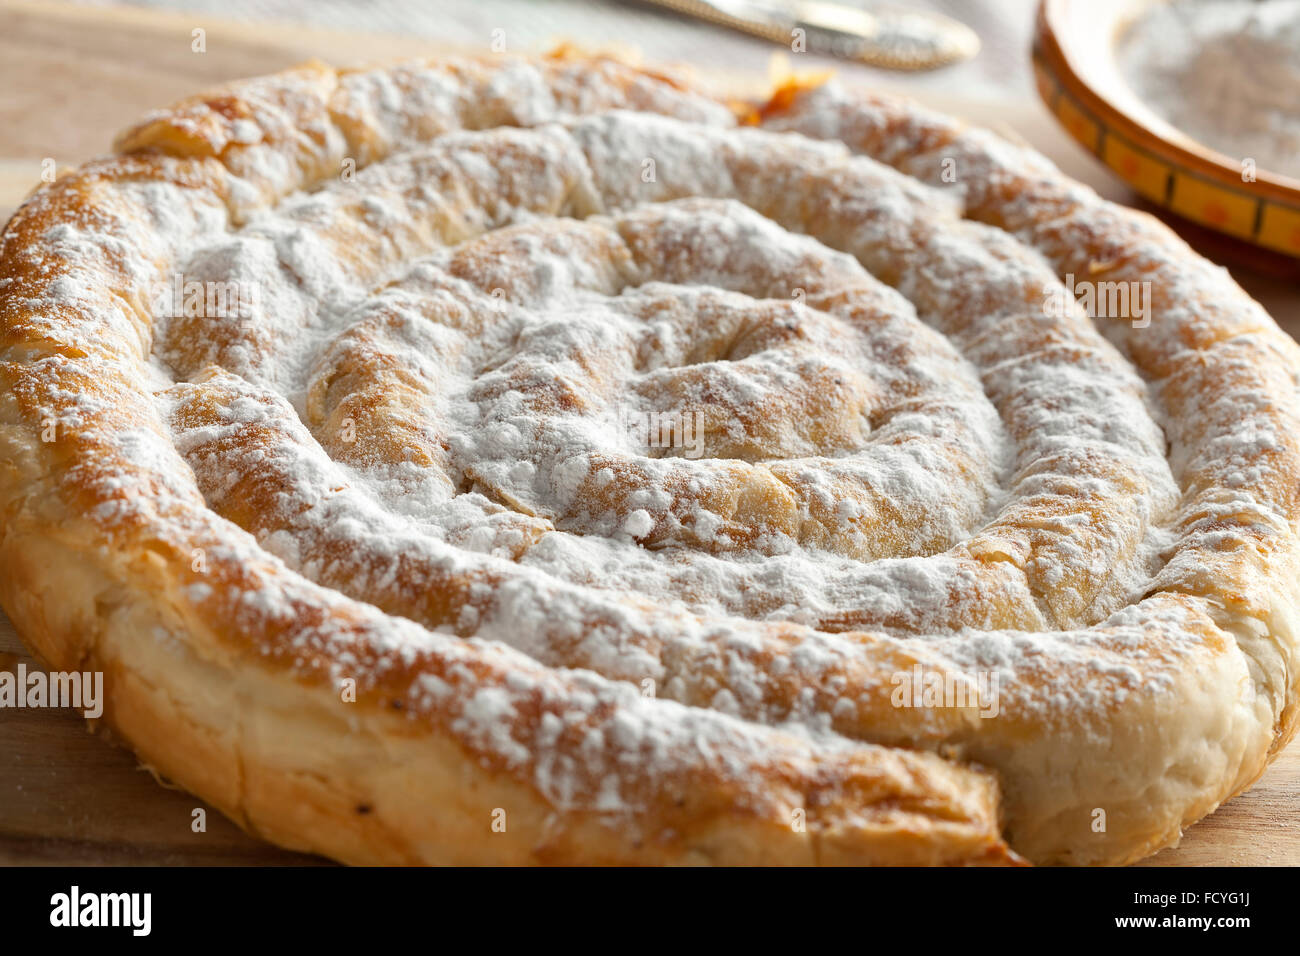 Moroccan mhanncha, Snake Shaped Pastry Stock Photo